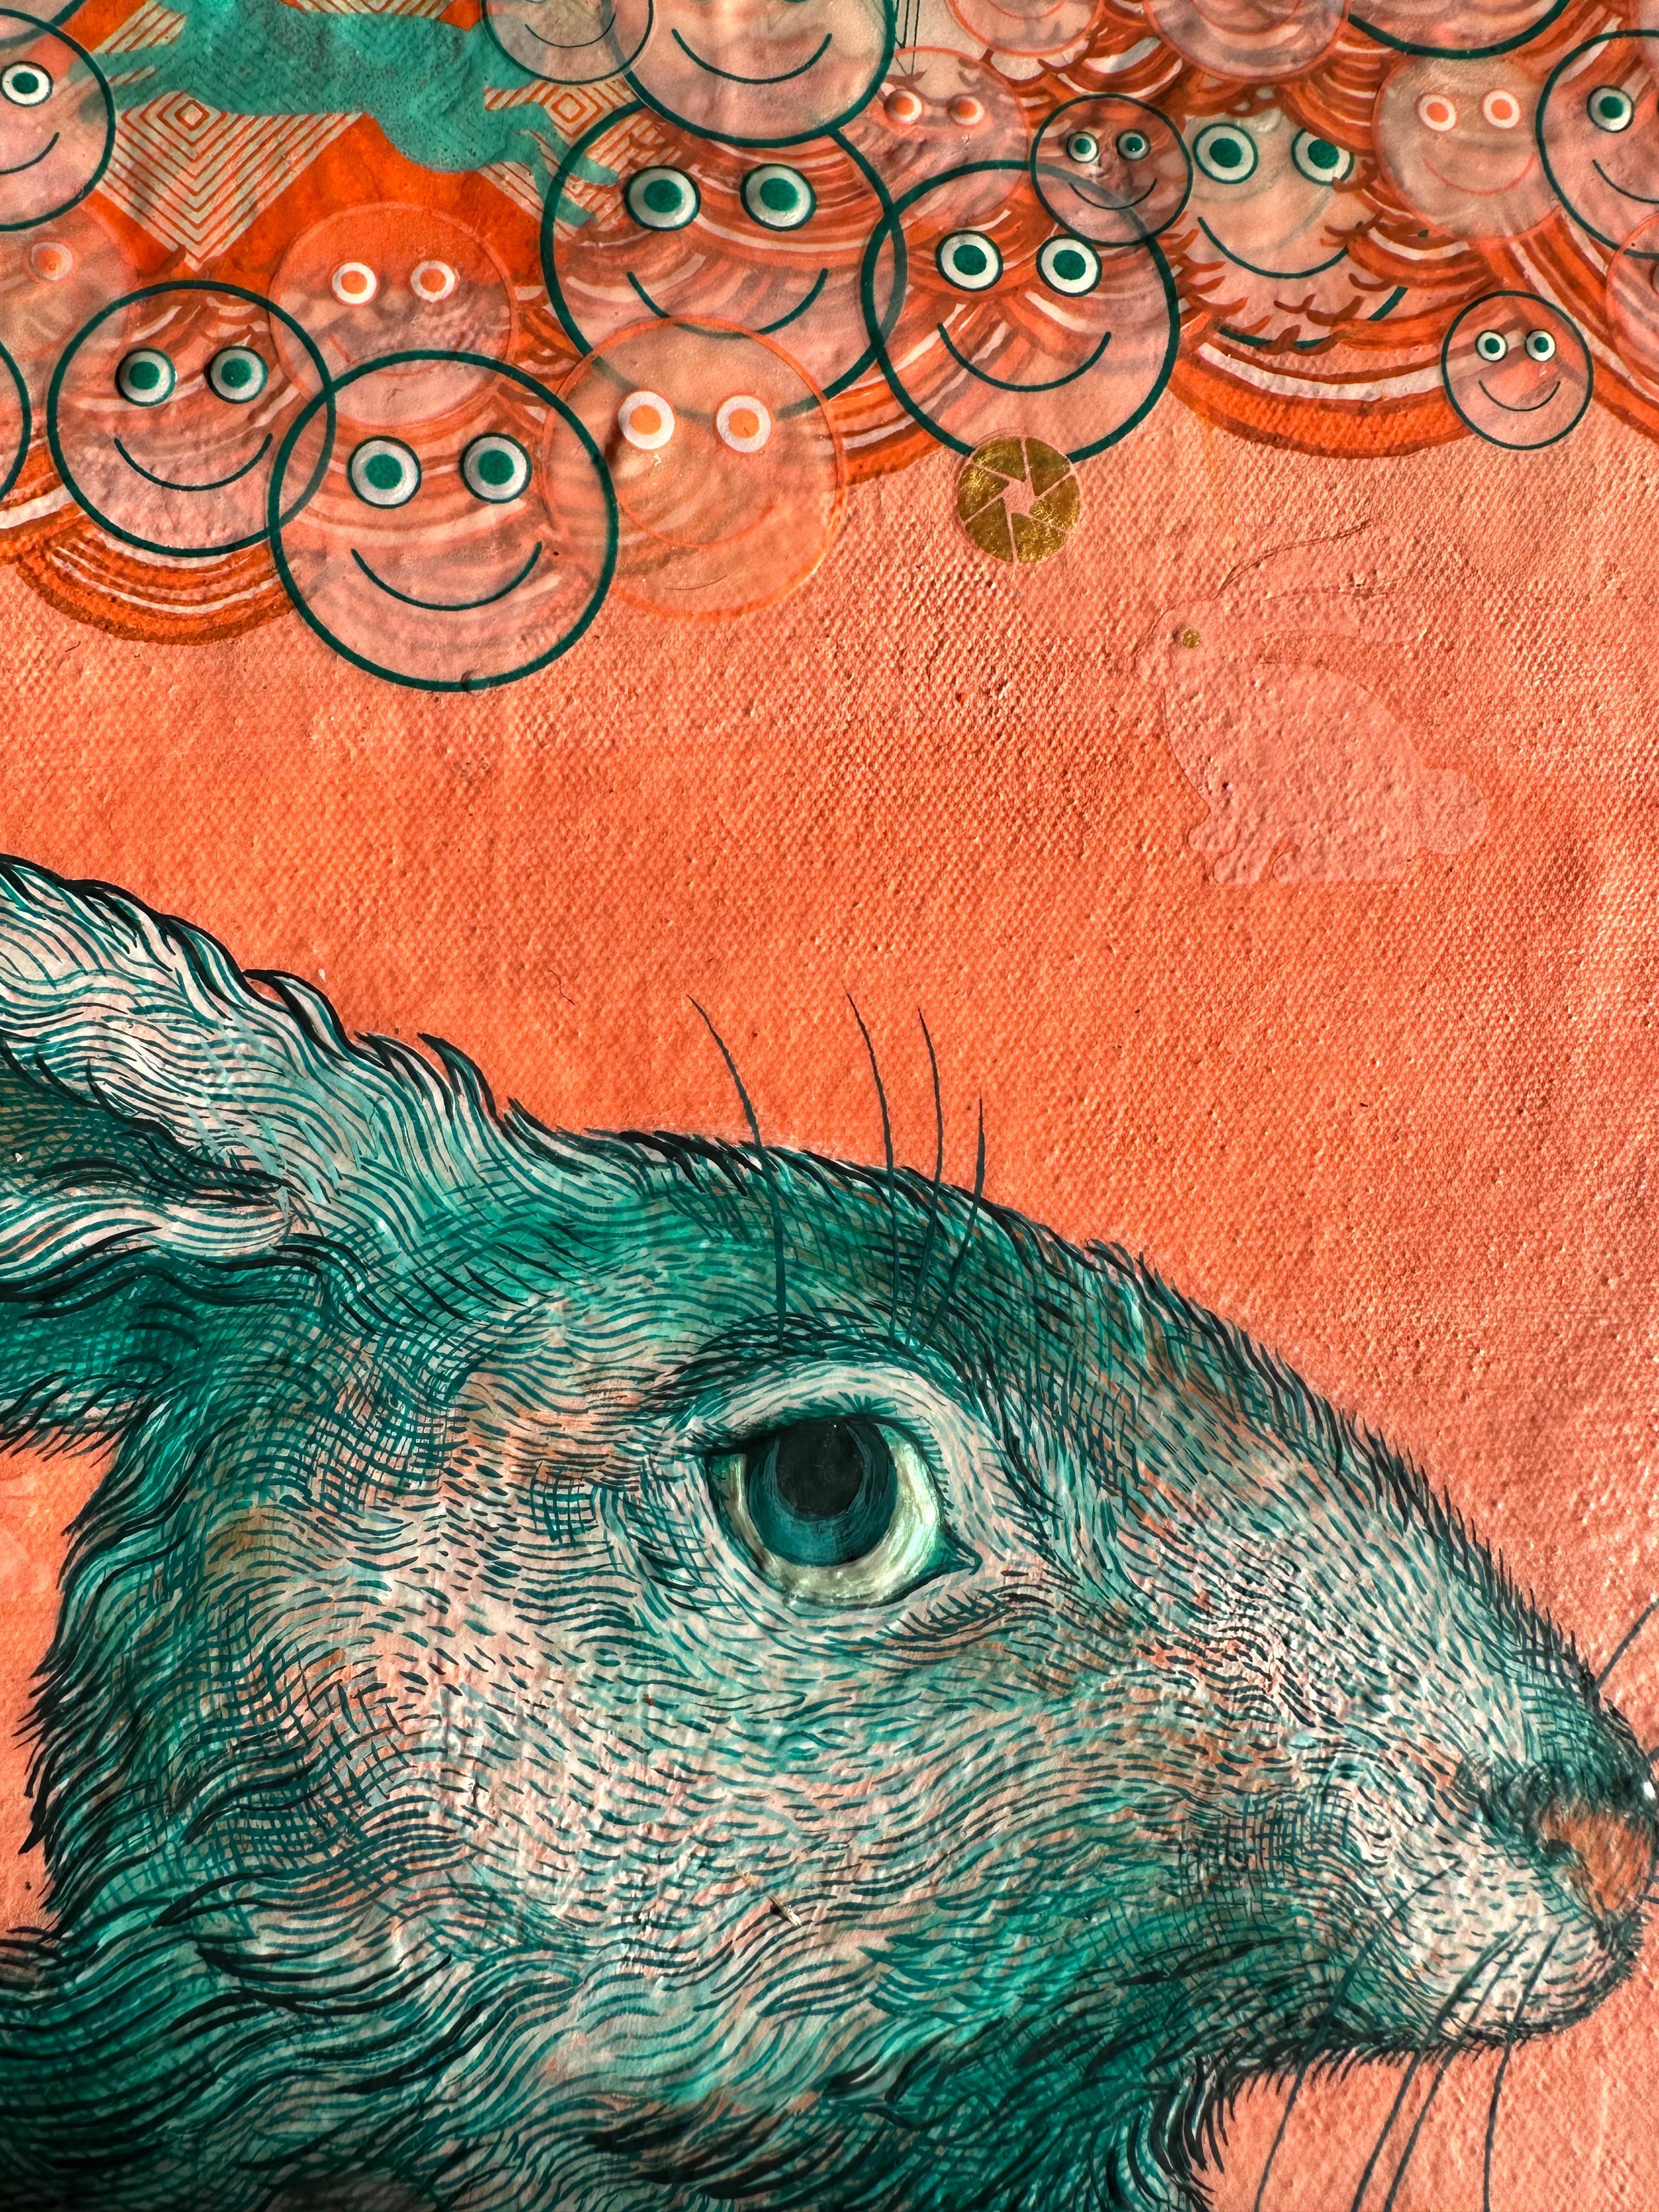 Rabbit Hole Singularity, Bunny, Flowers, Pink, Teal Surreal Botanical Landscape For Sale 3